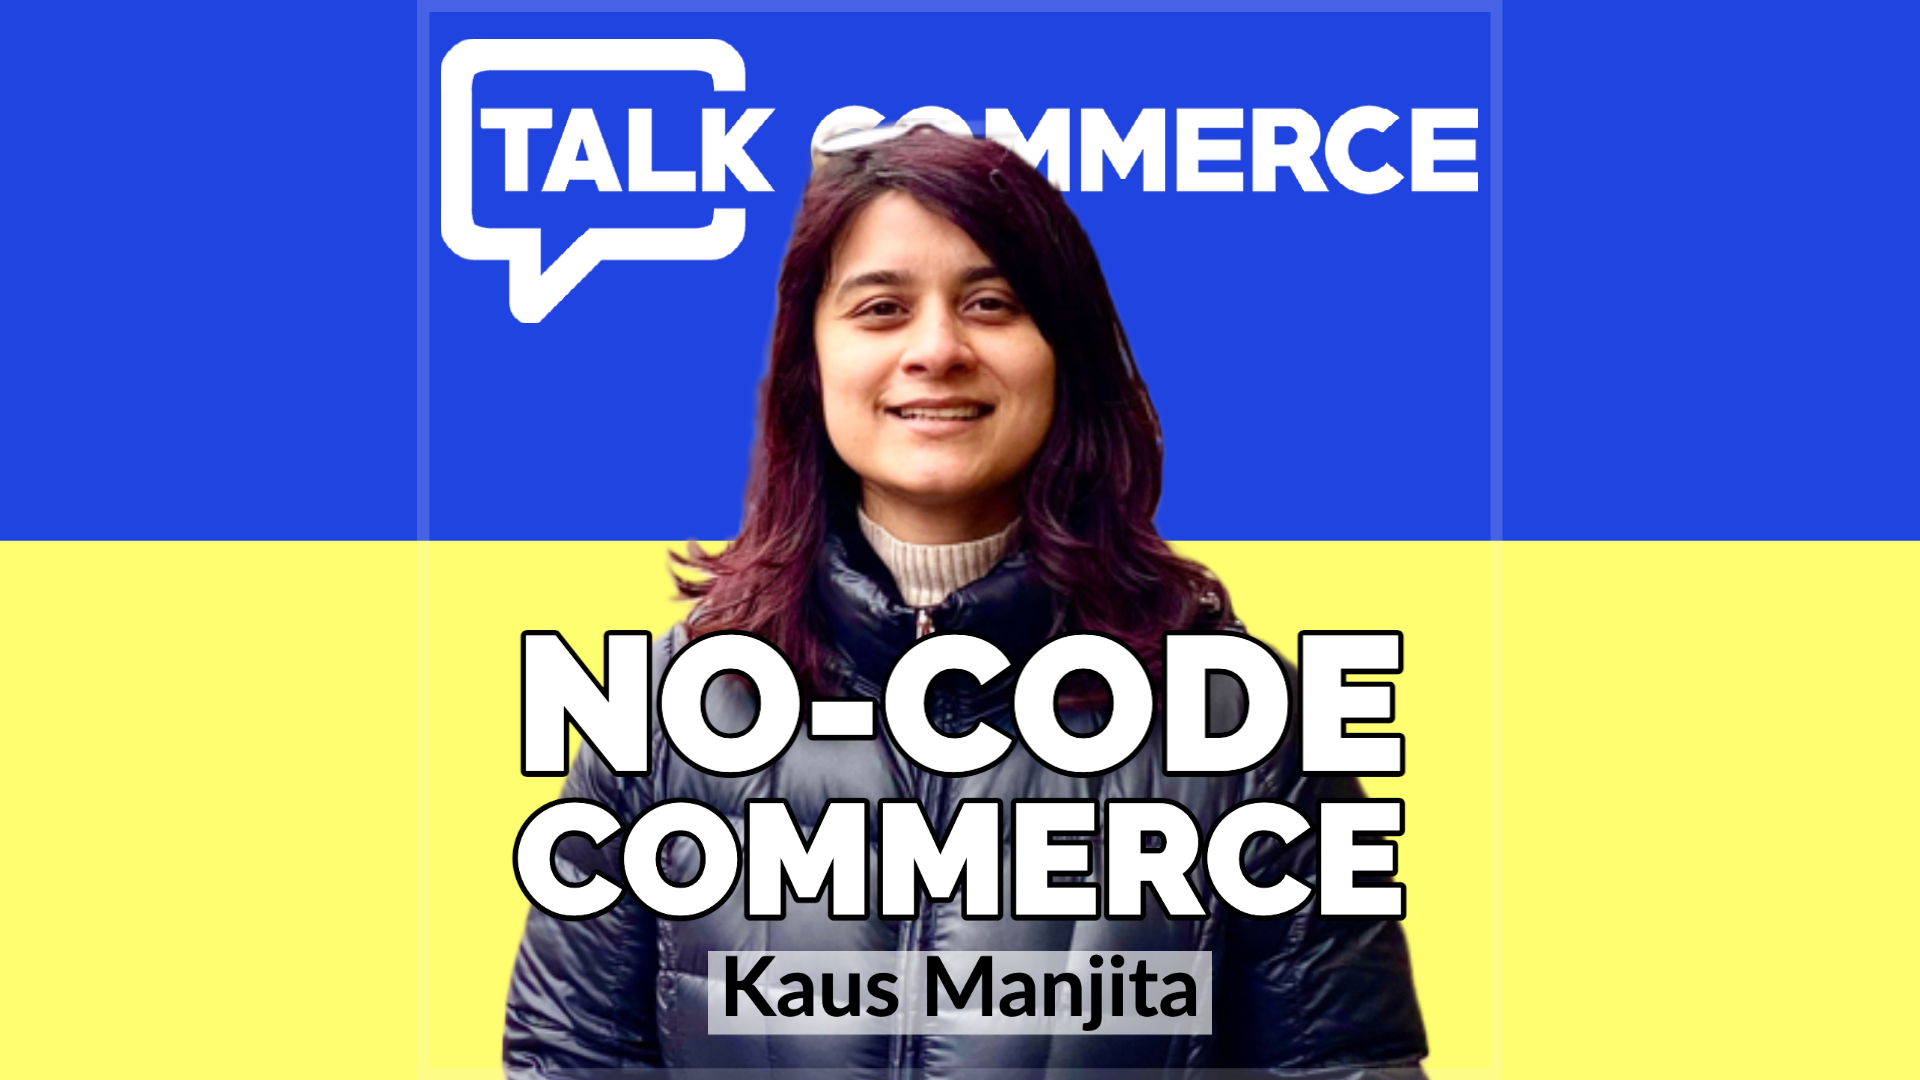 Talk-Commerce Kaus Manjita